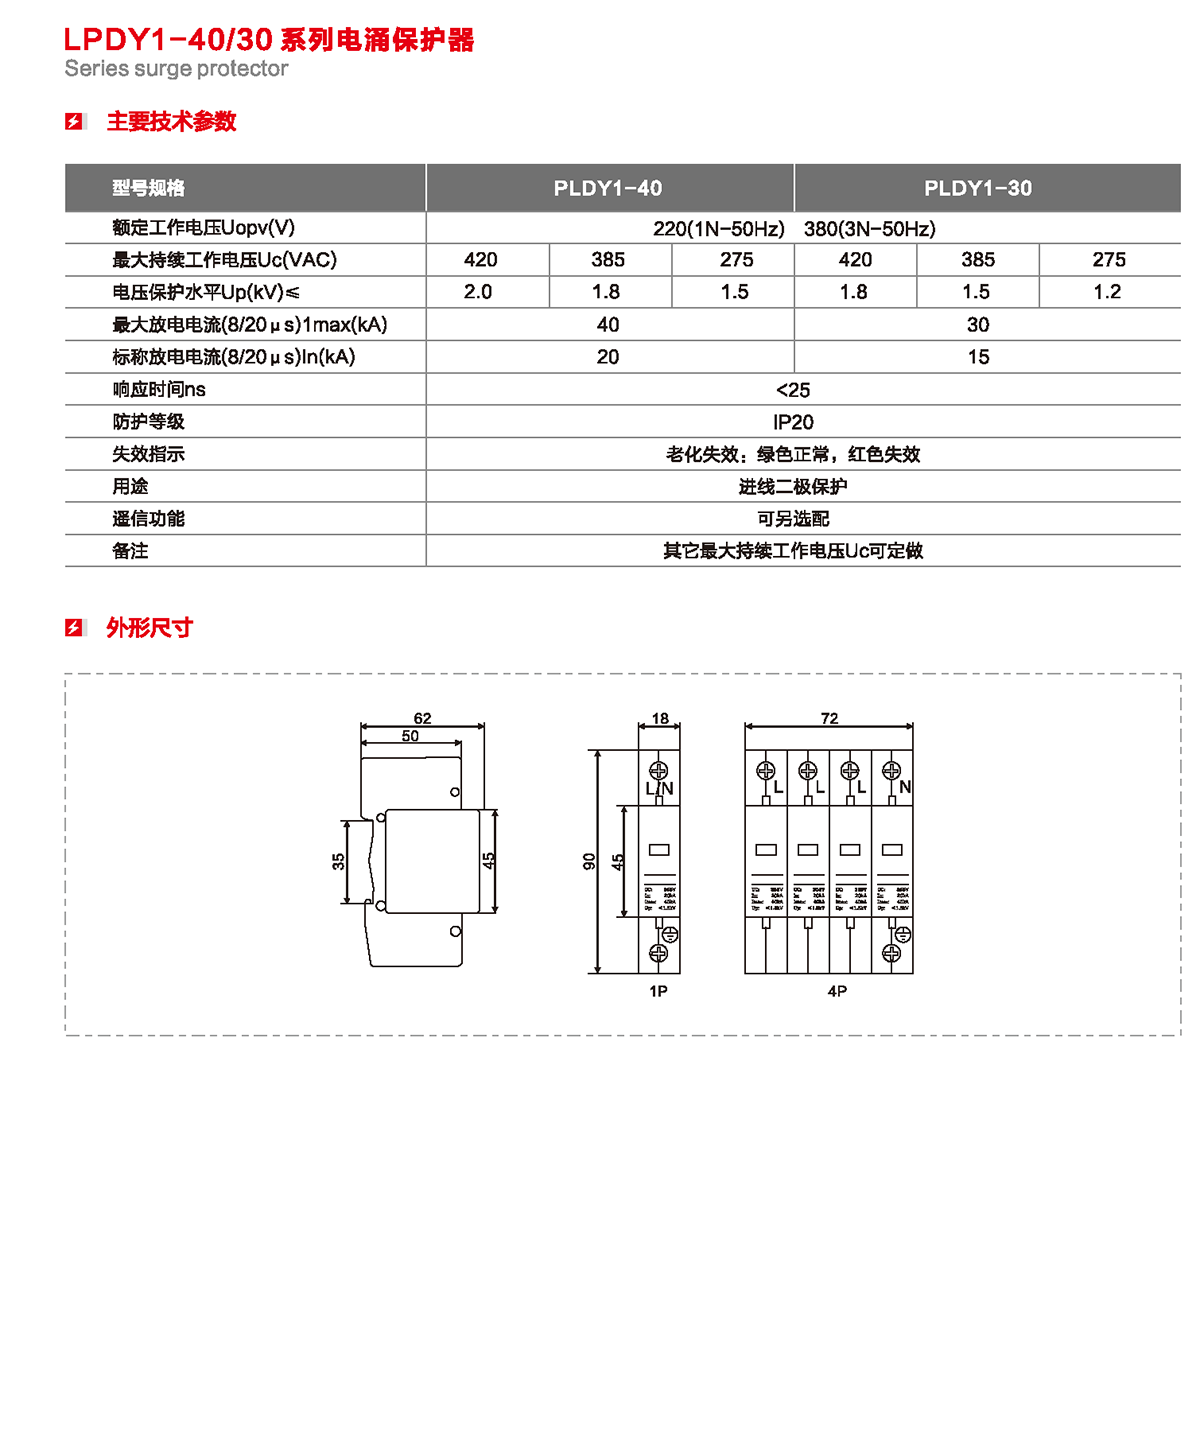 LPDY1-40/30系列电涌保护器产品详情